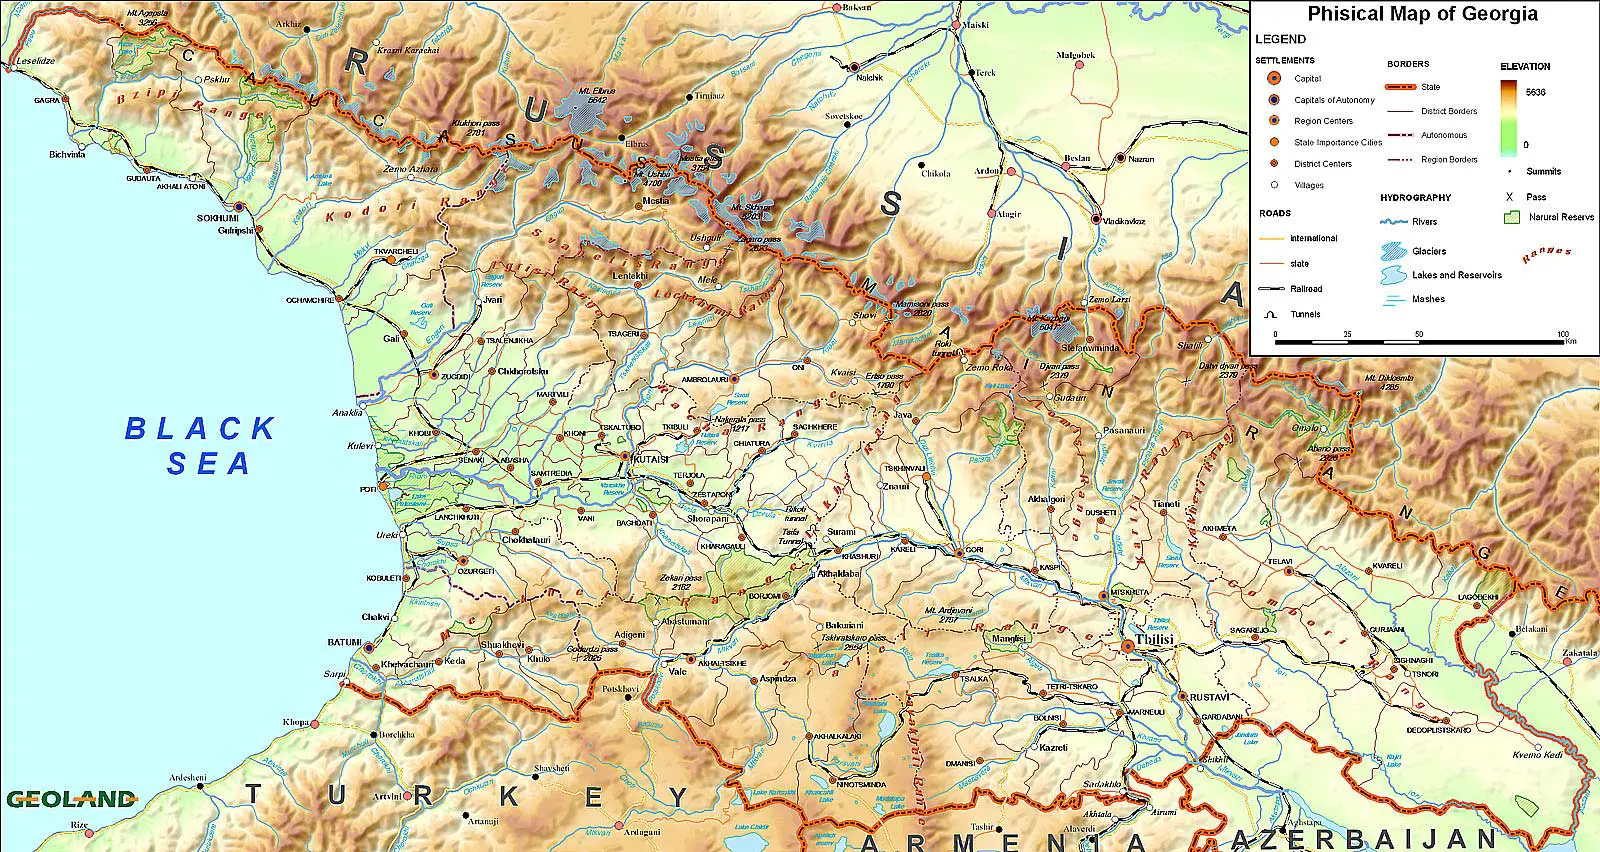 Physical Map of Georgia